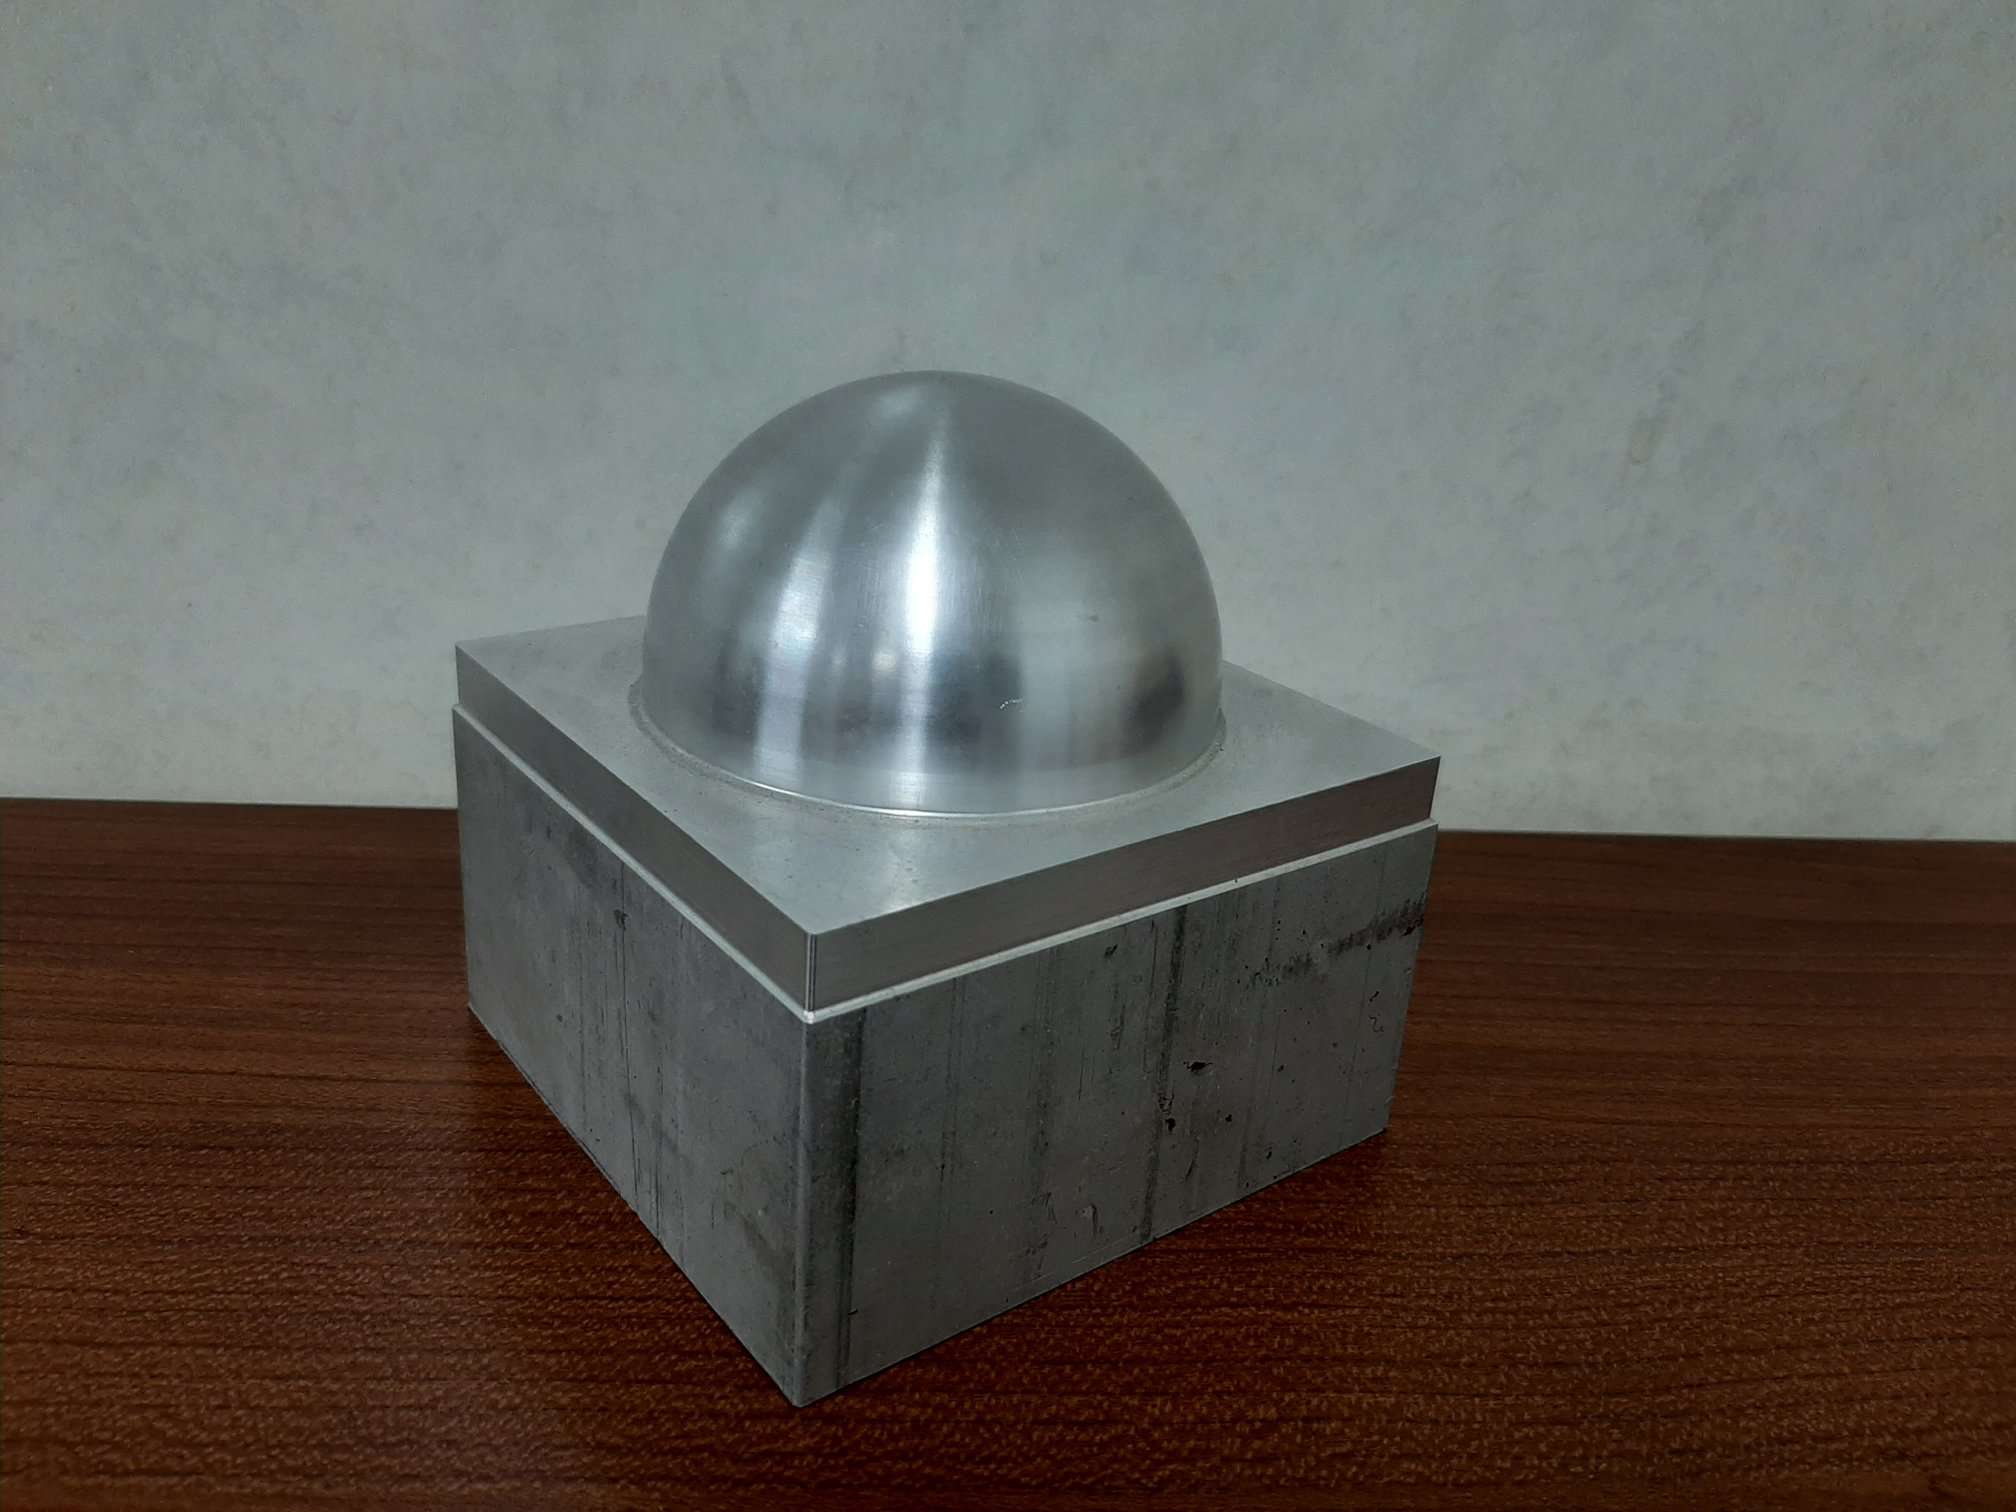 Model. VMC-1360
Purpose: Ball Milling 